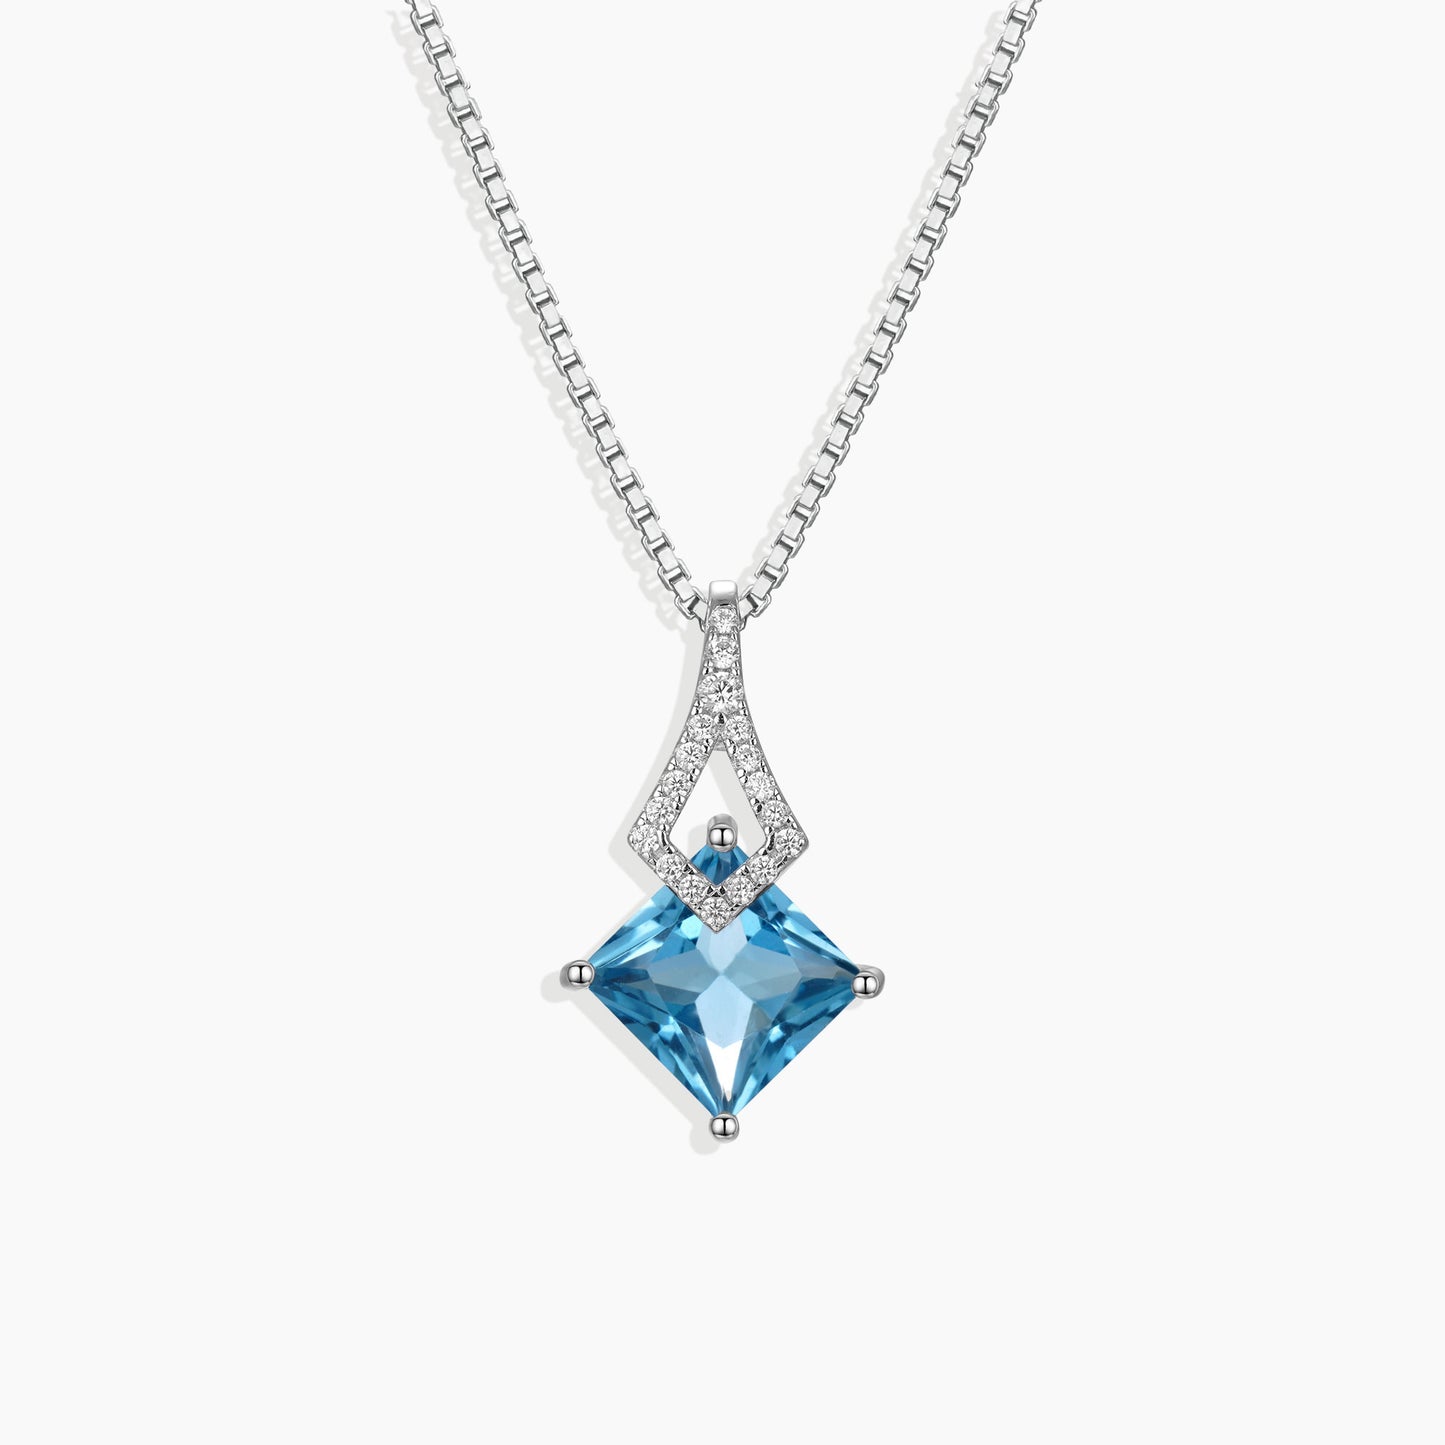 London Blue Topaz Princess cut Pendant Necklace in Sterling Silver